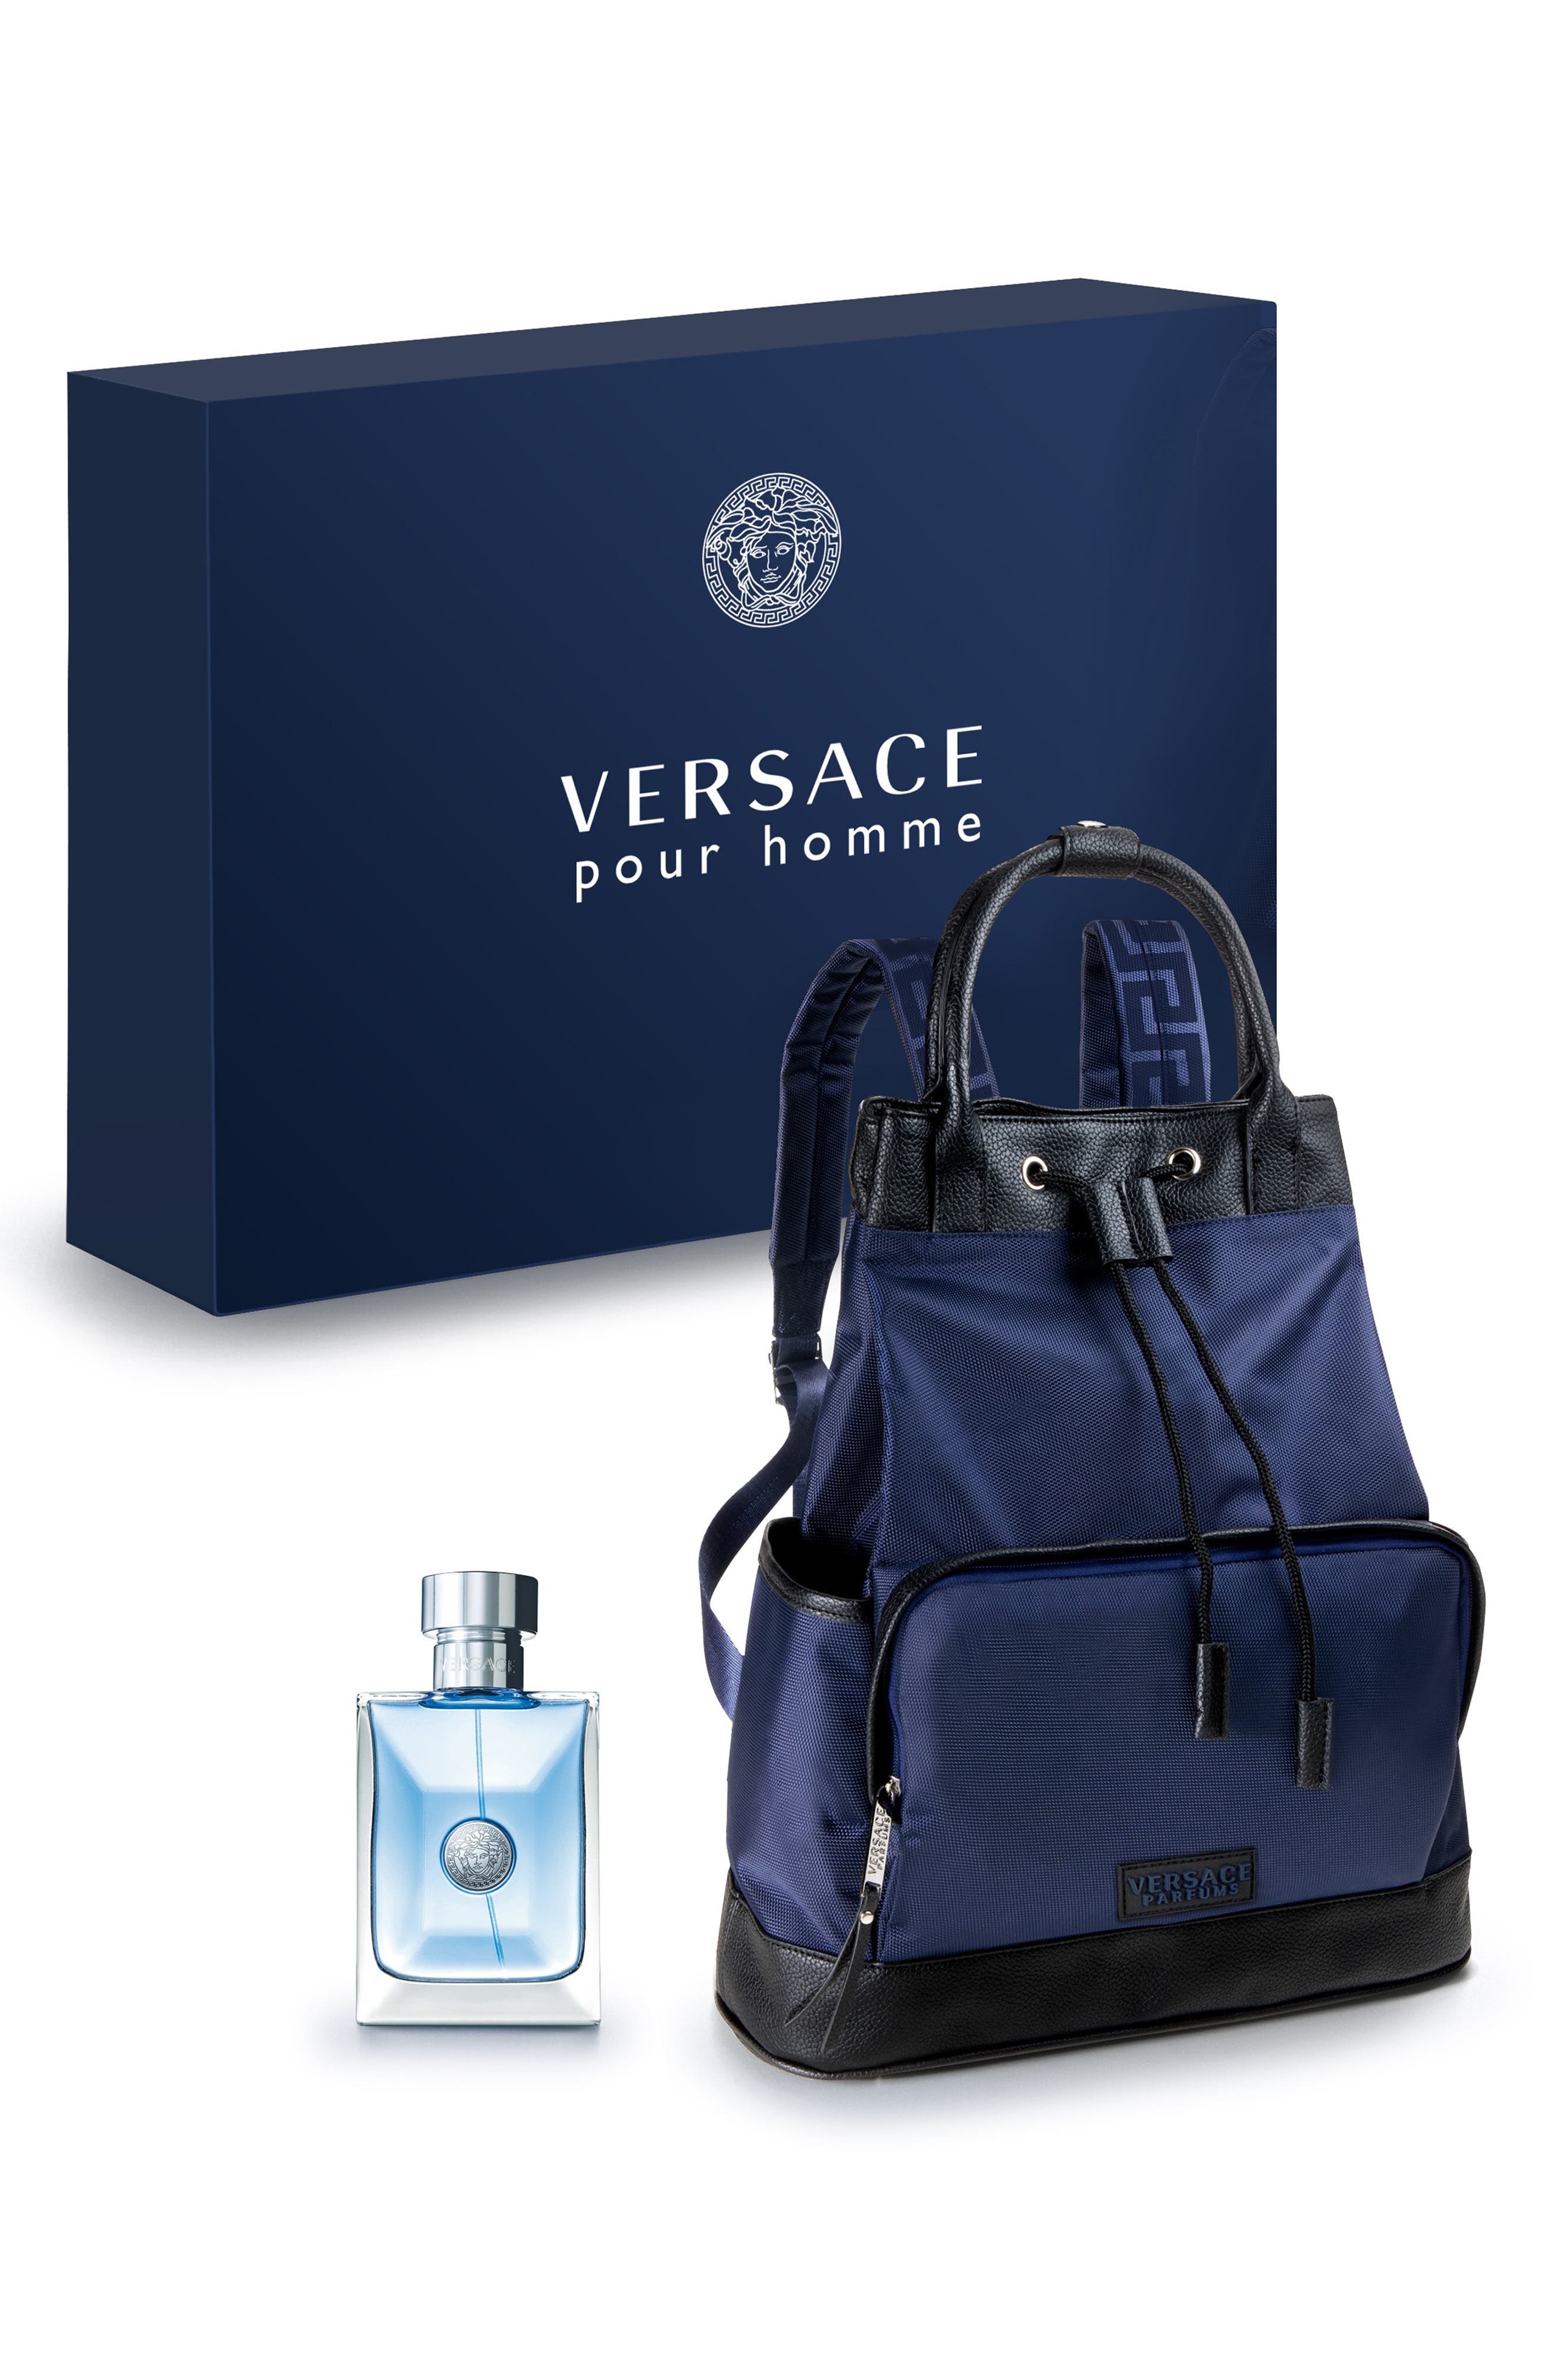 versace special edition perfume price